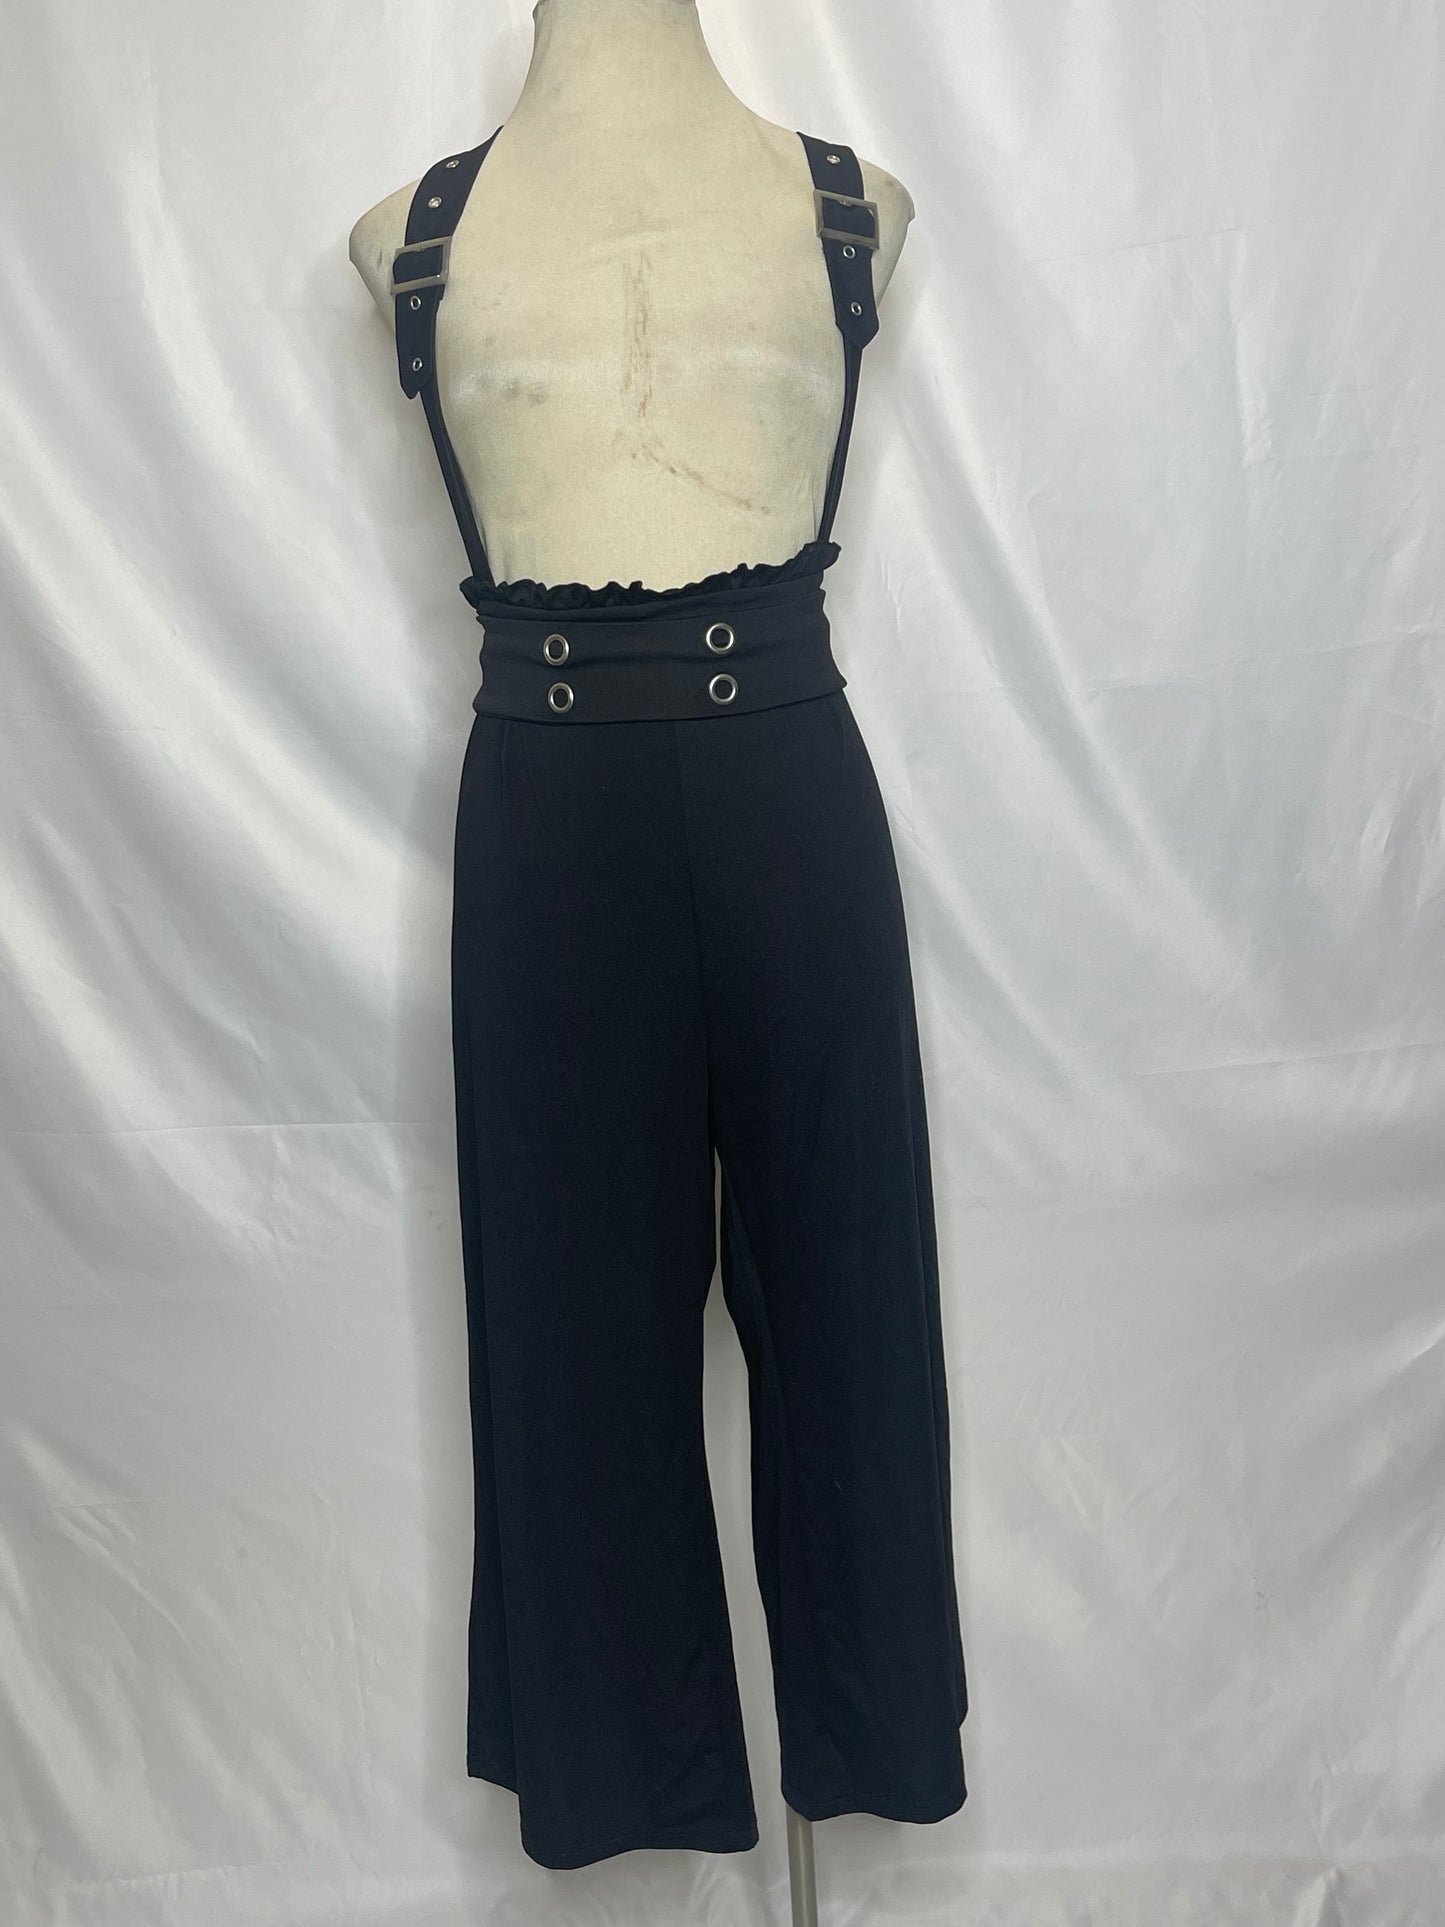 ROSEGAL High -waisted Suspender pants